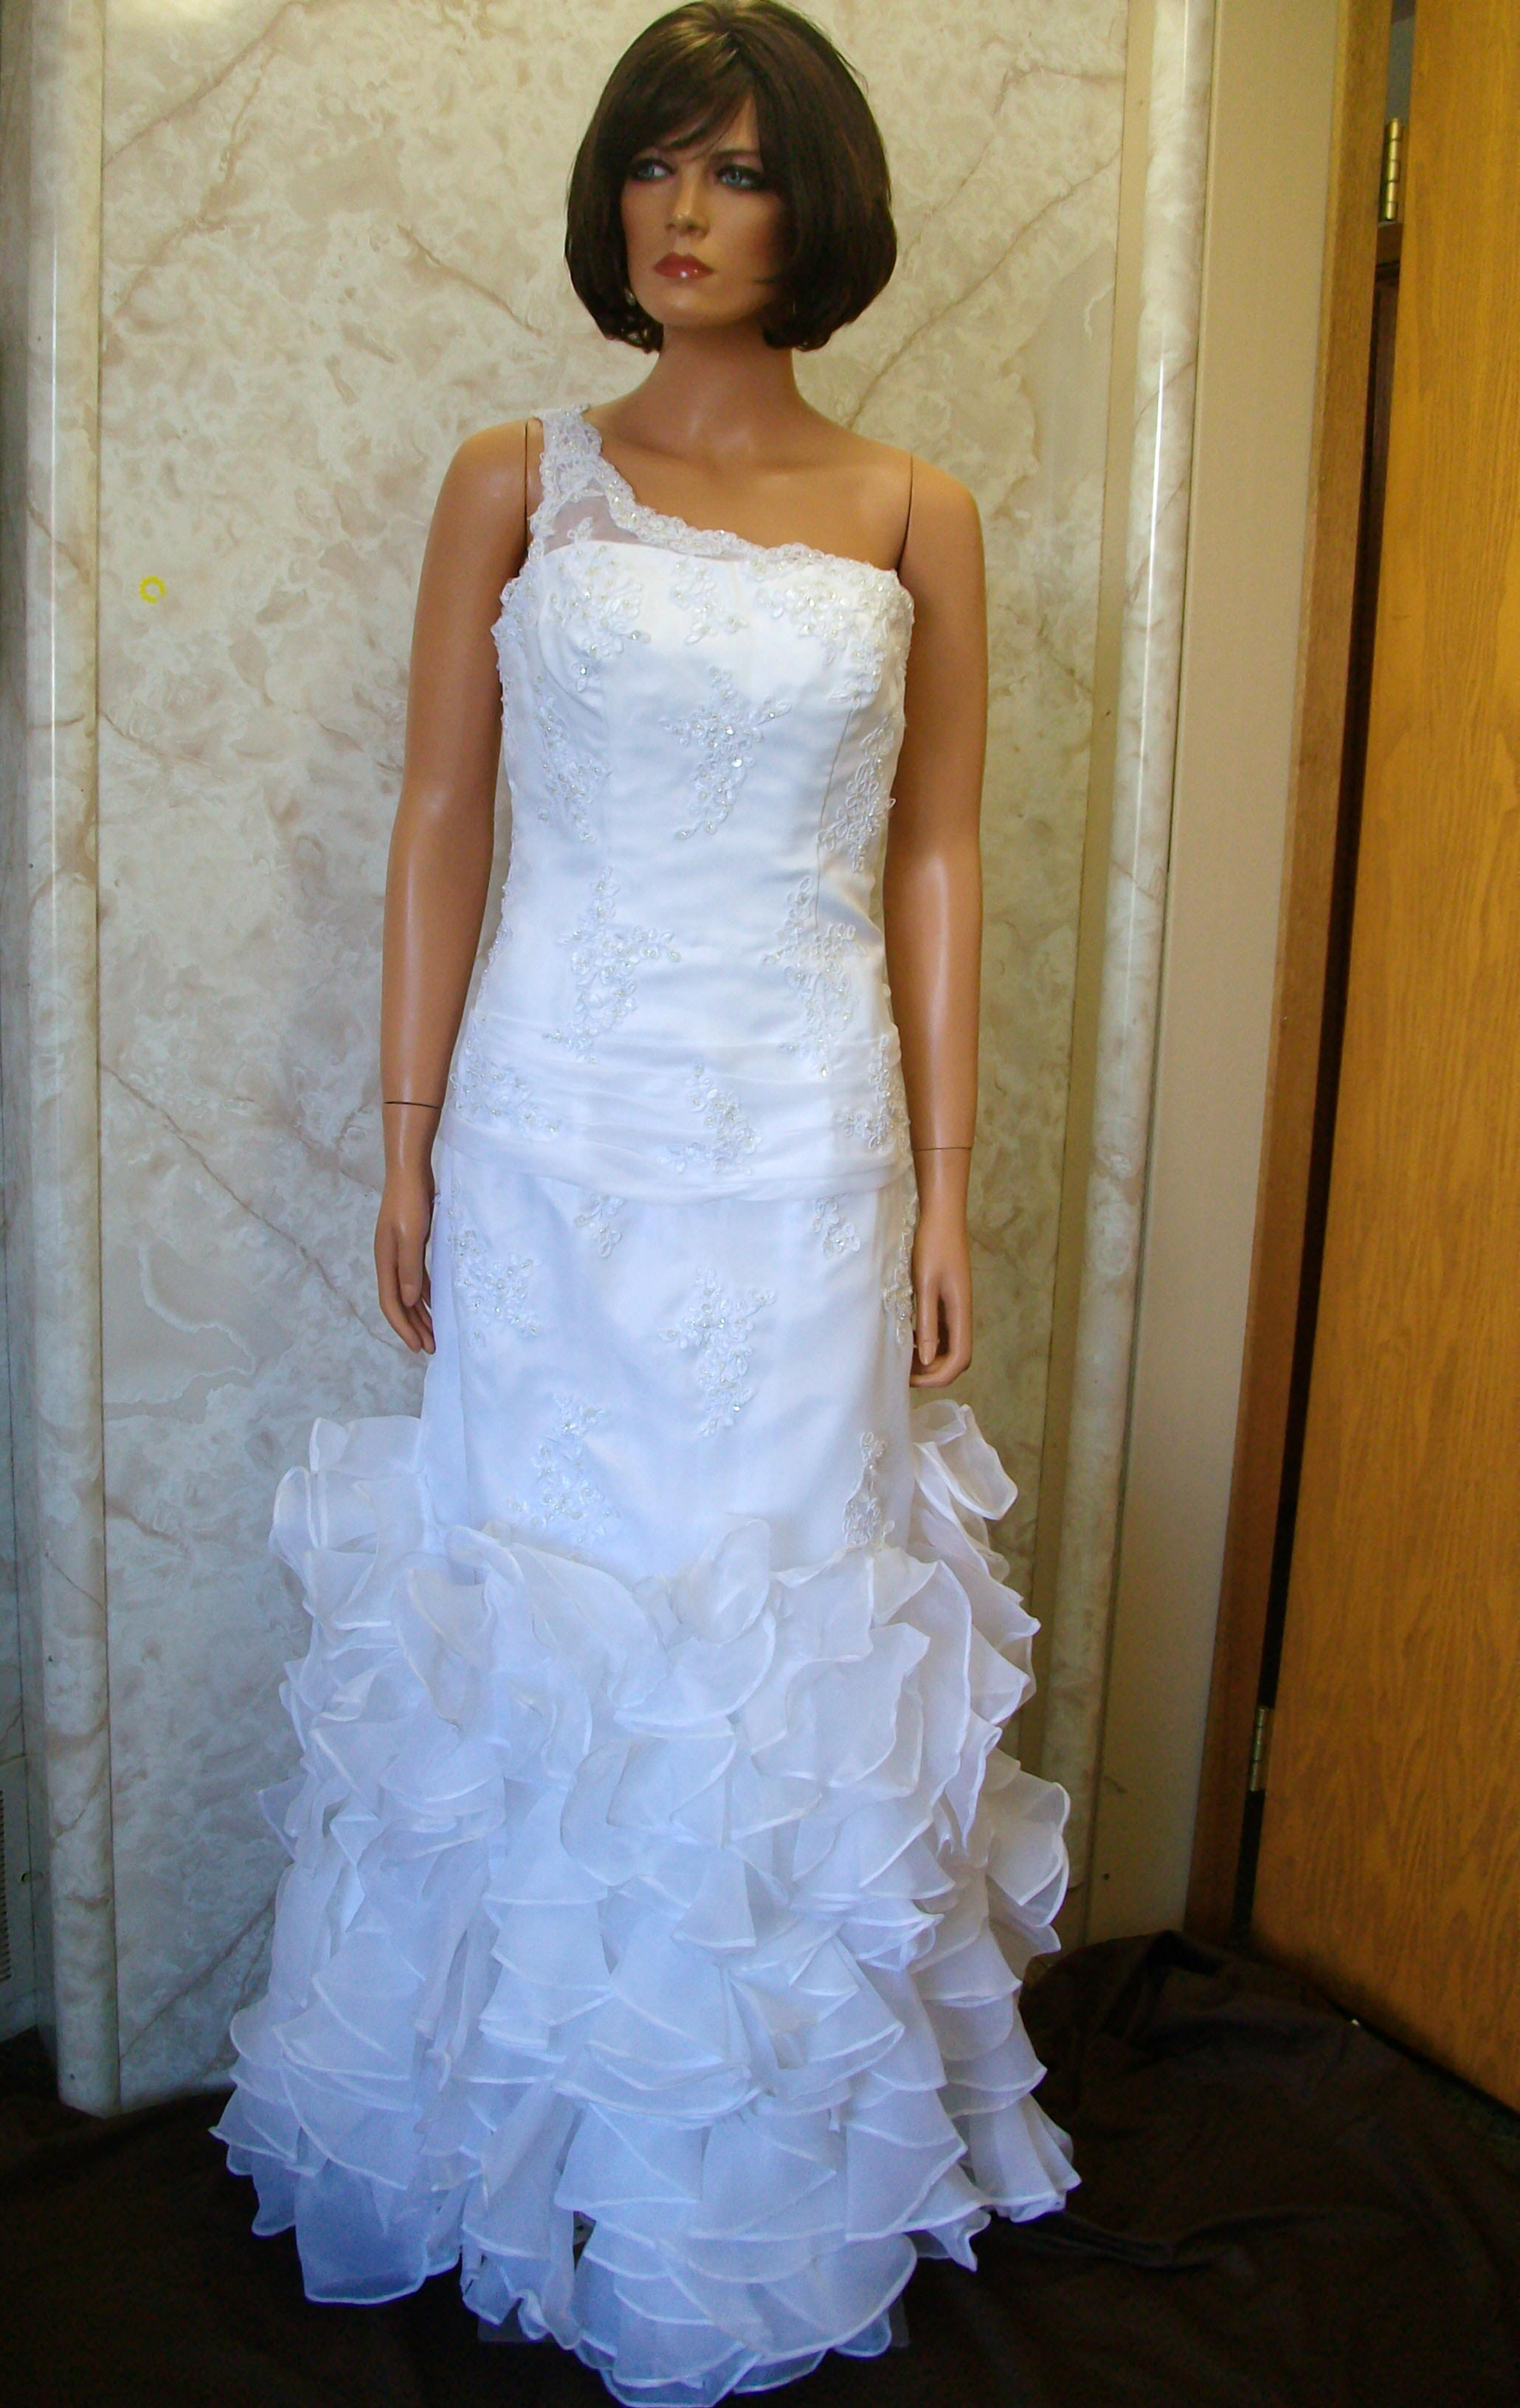 ruffled skirt wedding gown